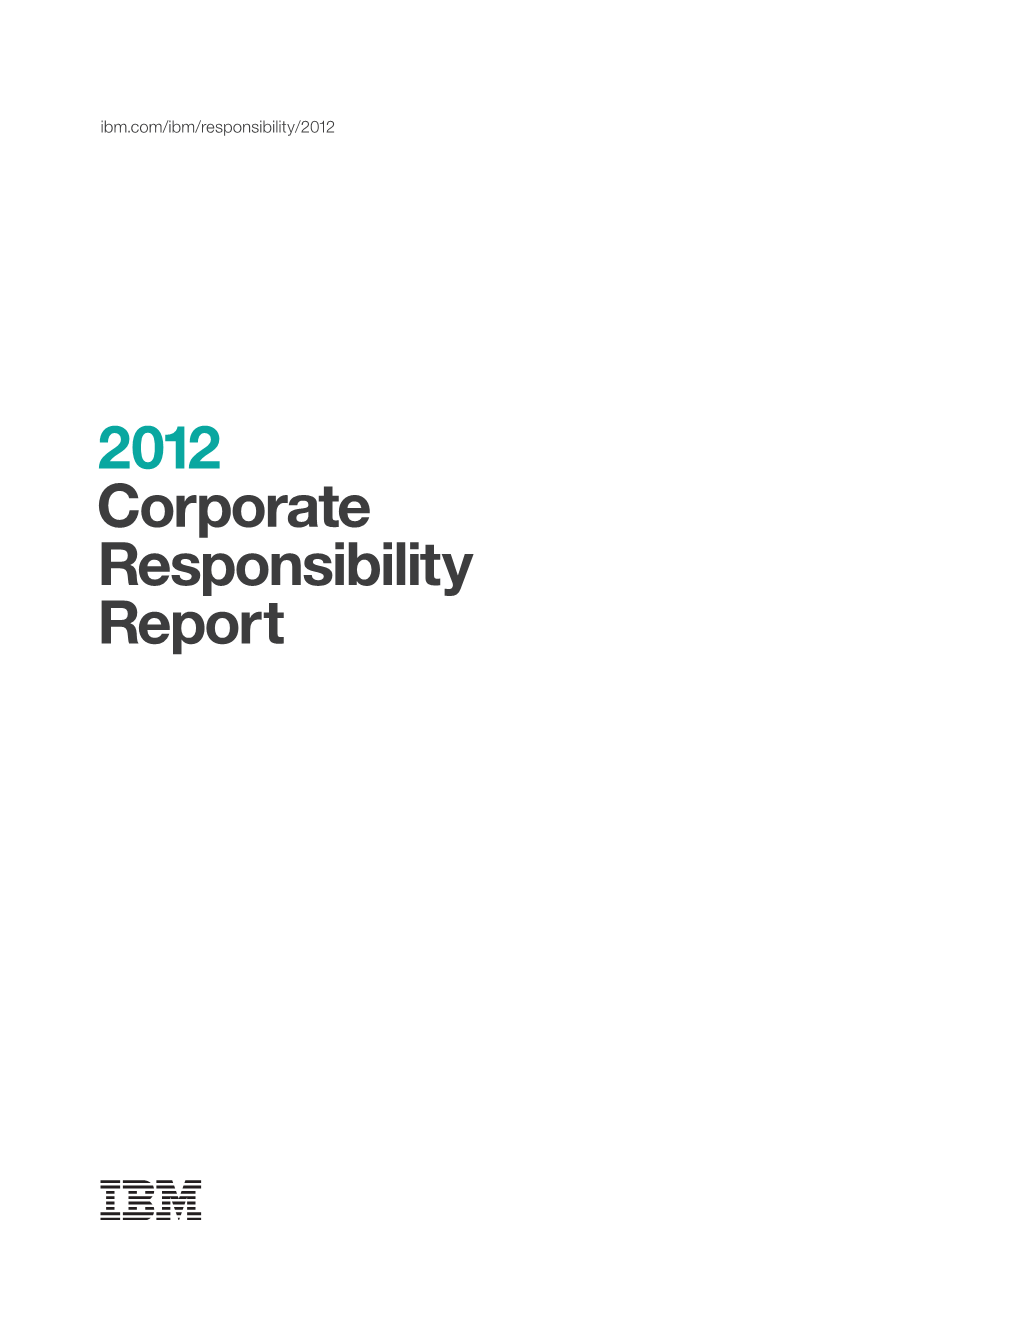 2012 Corporate Responsibility Report IBM 2012 Corporate Responsibility Report 2